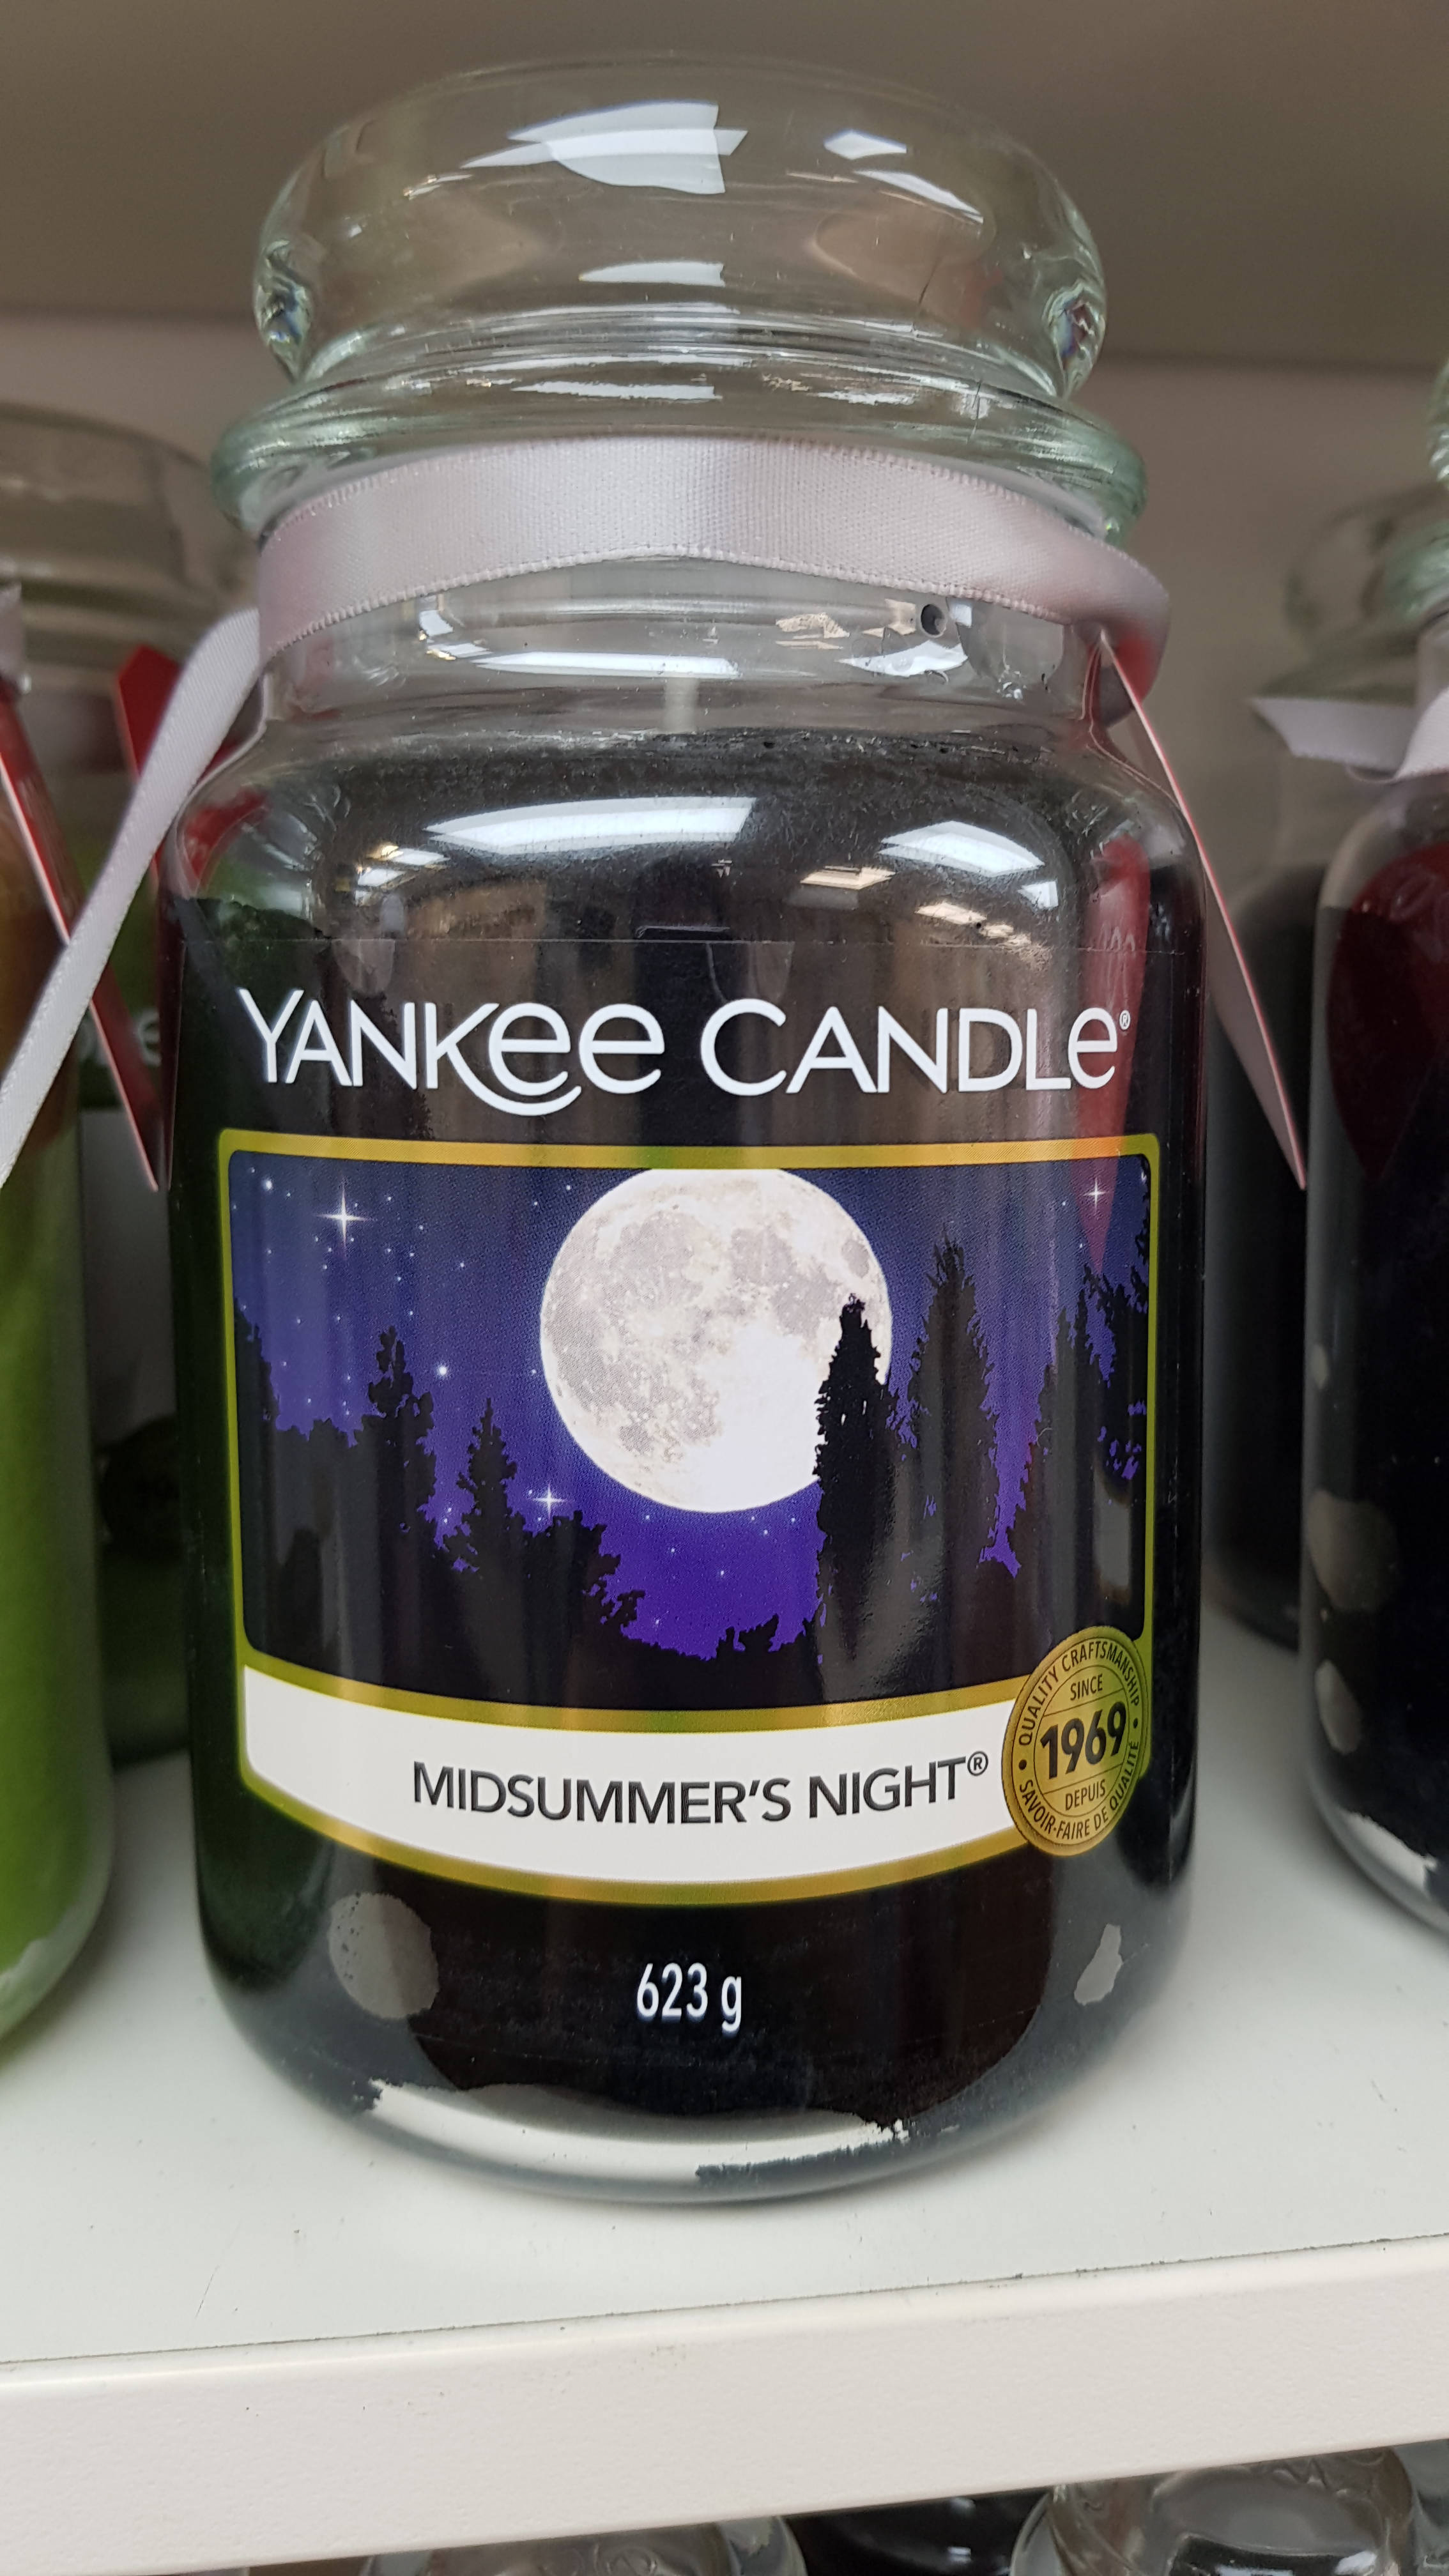 Midsummer's Night Yankee Candle – Leighton Buzzard High Street